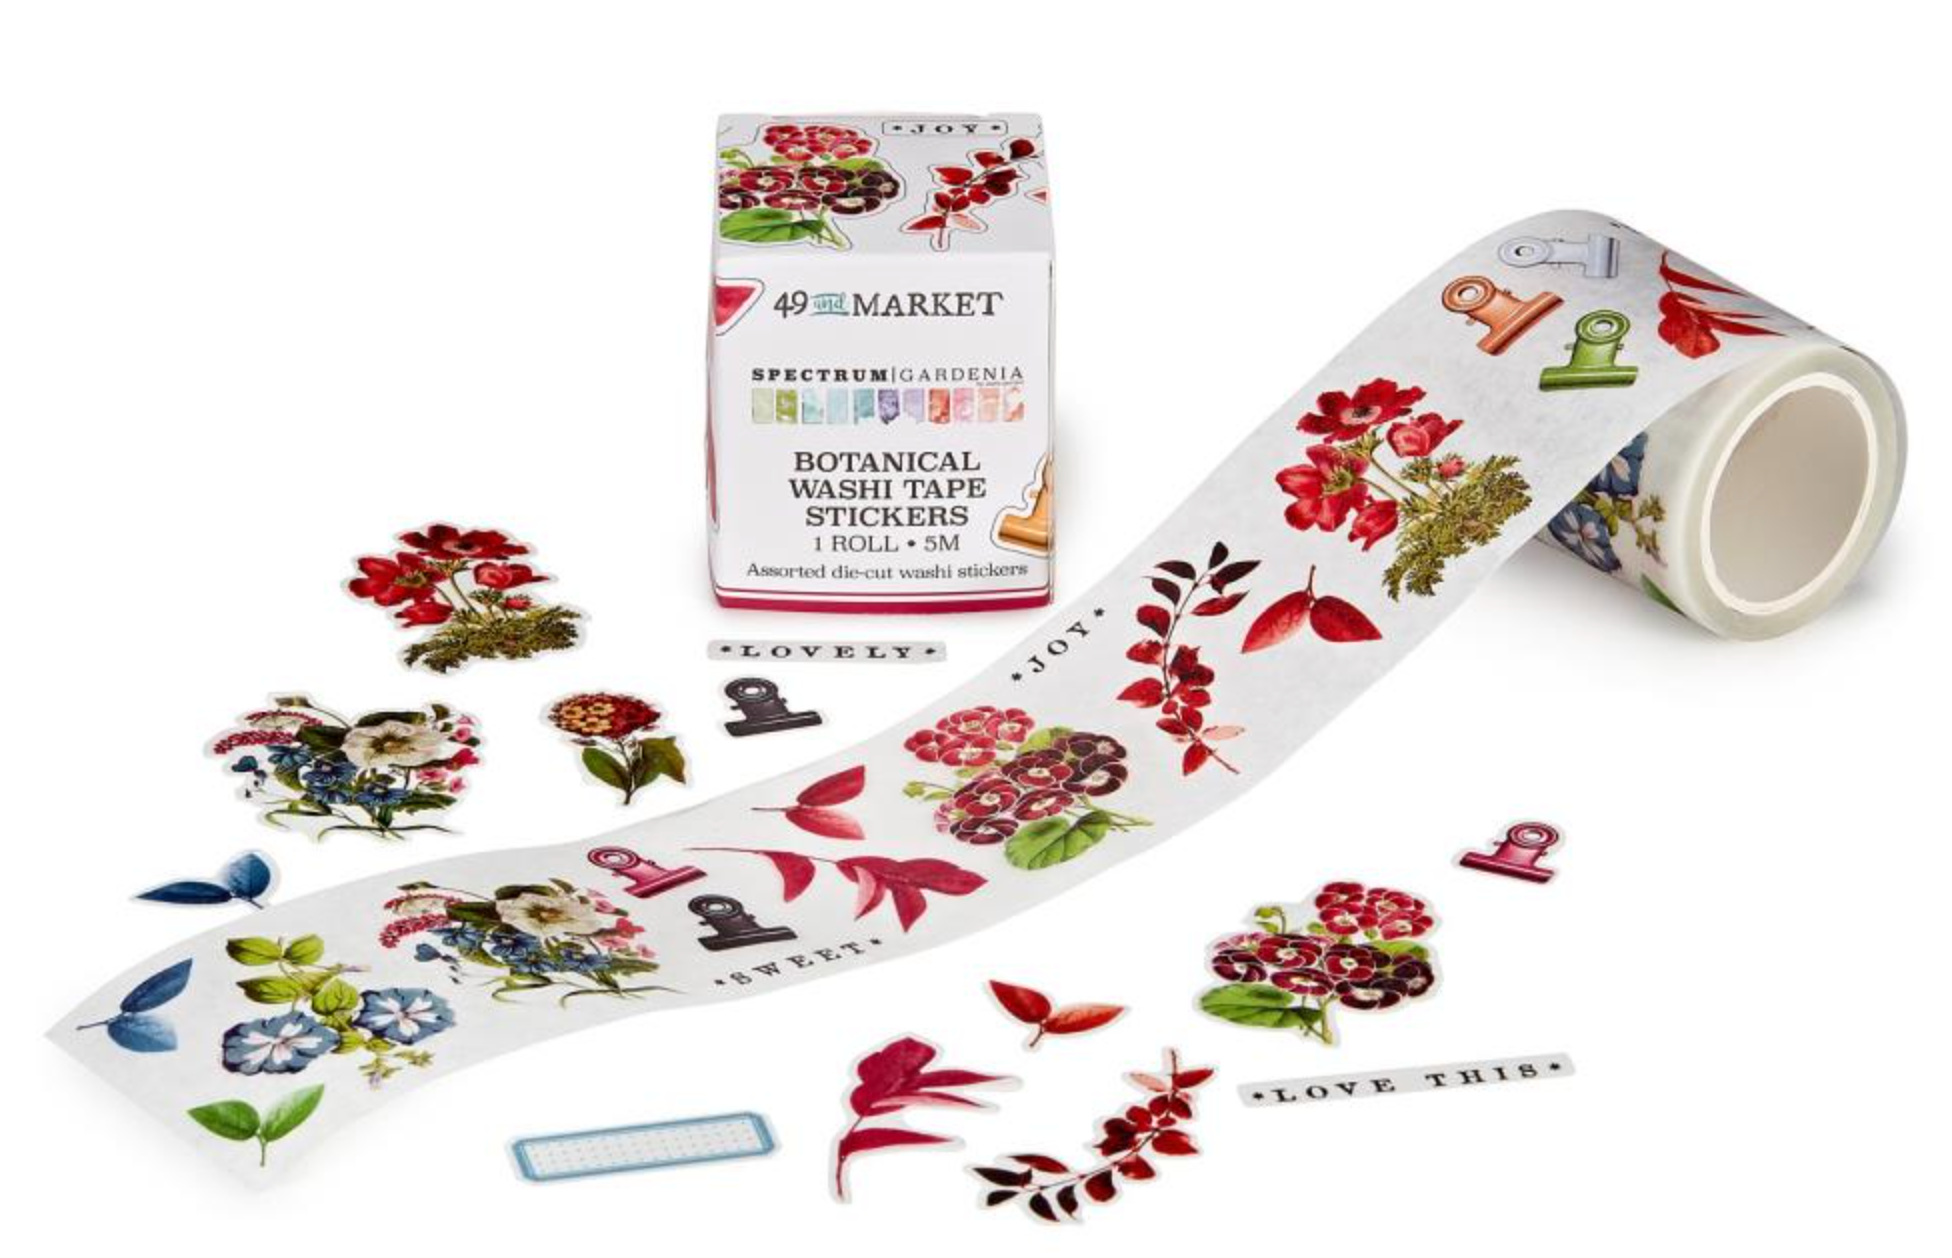 Botanical Washi Sticker Roll- Spectrum Gardenia - 49 and Market